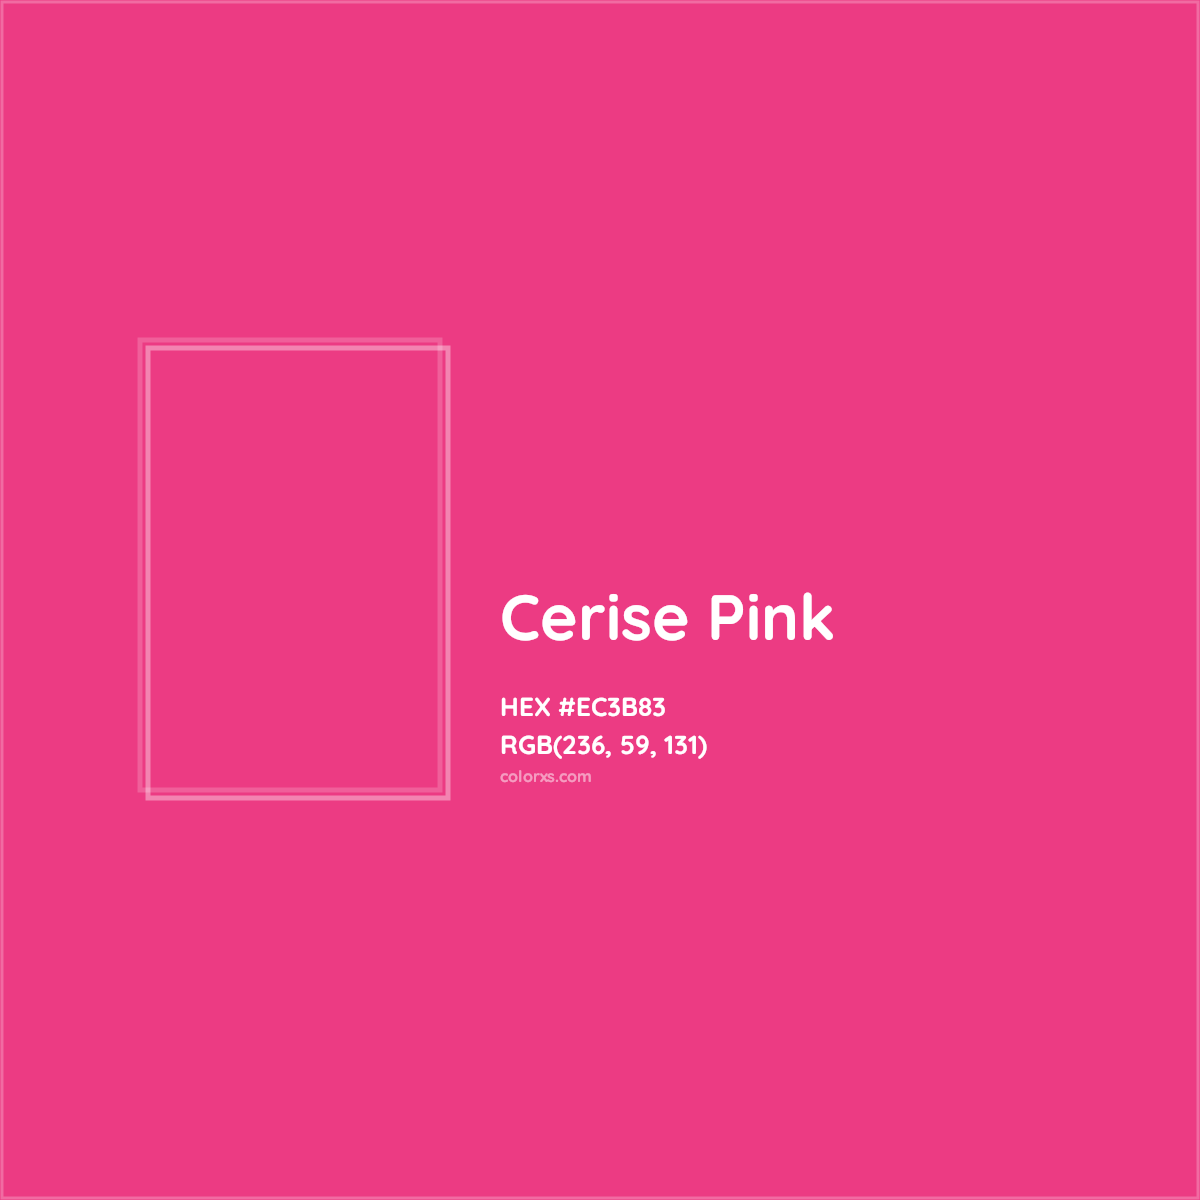 HEX #EC3B83 Cerise Pink Color - Color Code